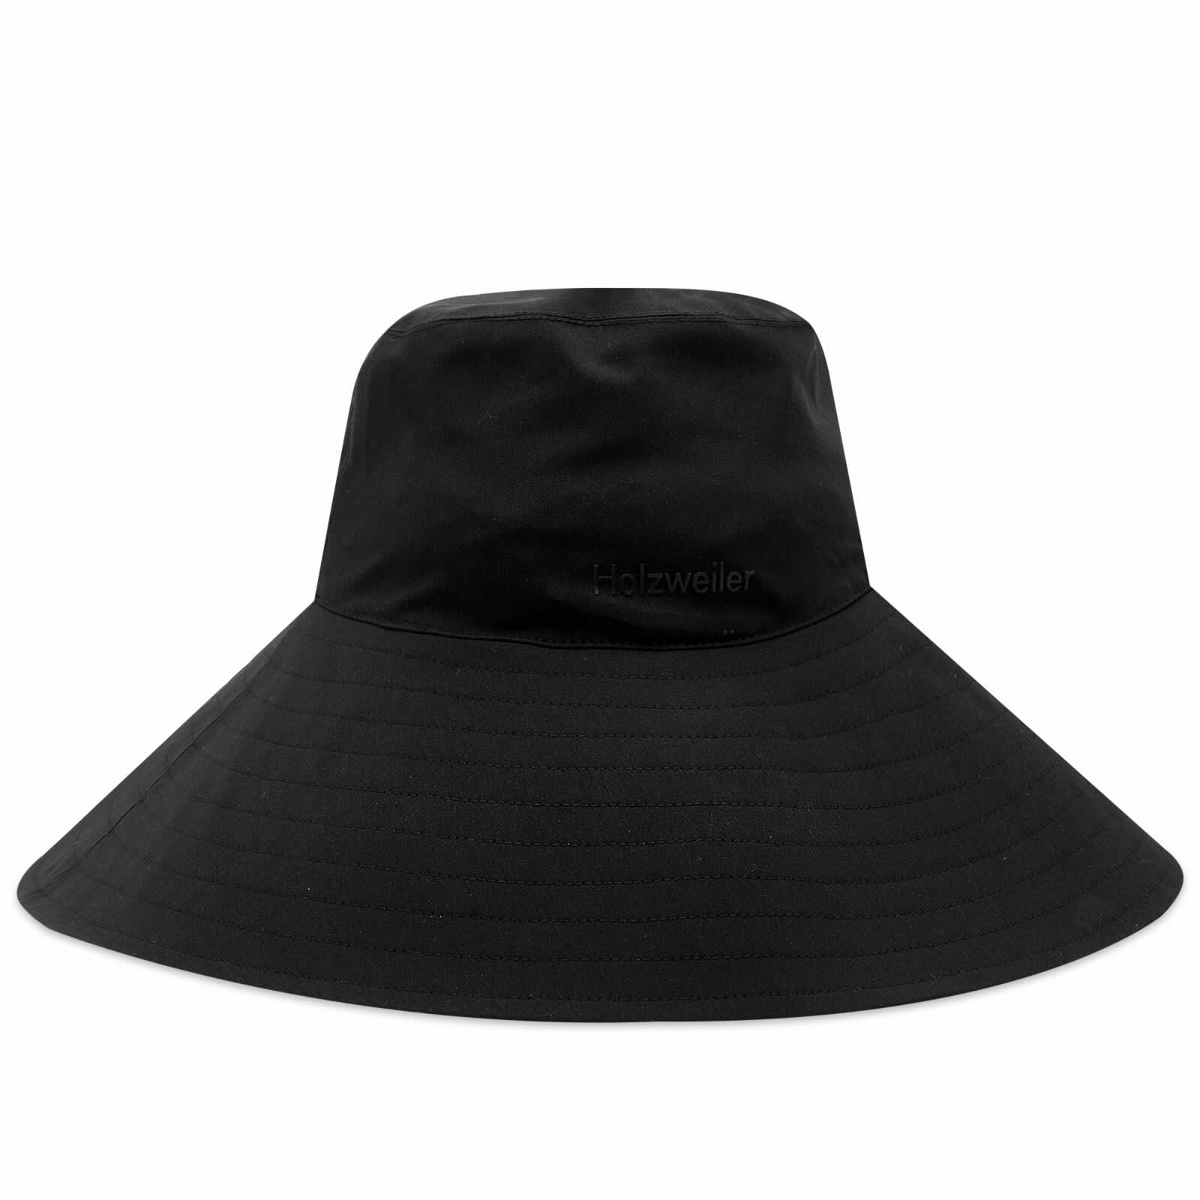 Photo: Holzweiler Women's Rajah Rain Bucket Hat in Black